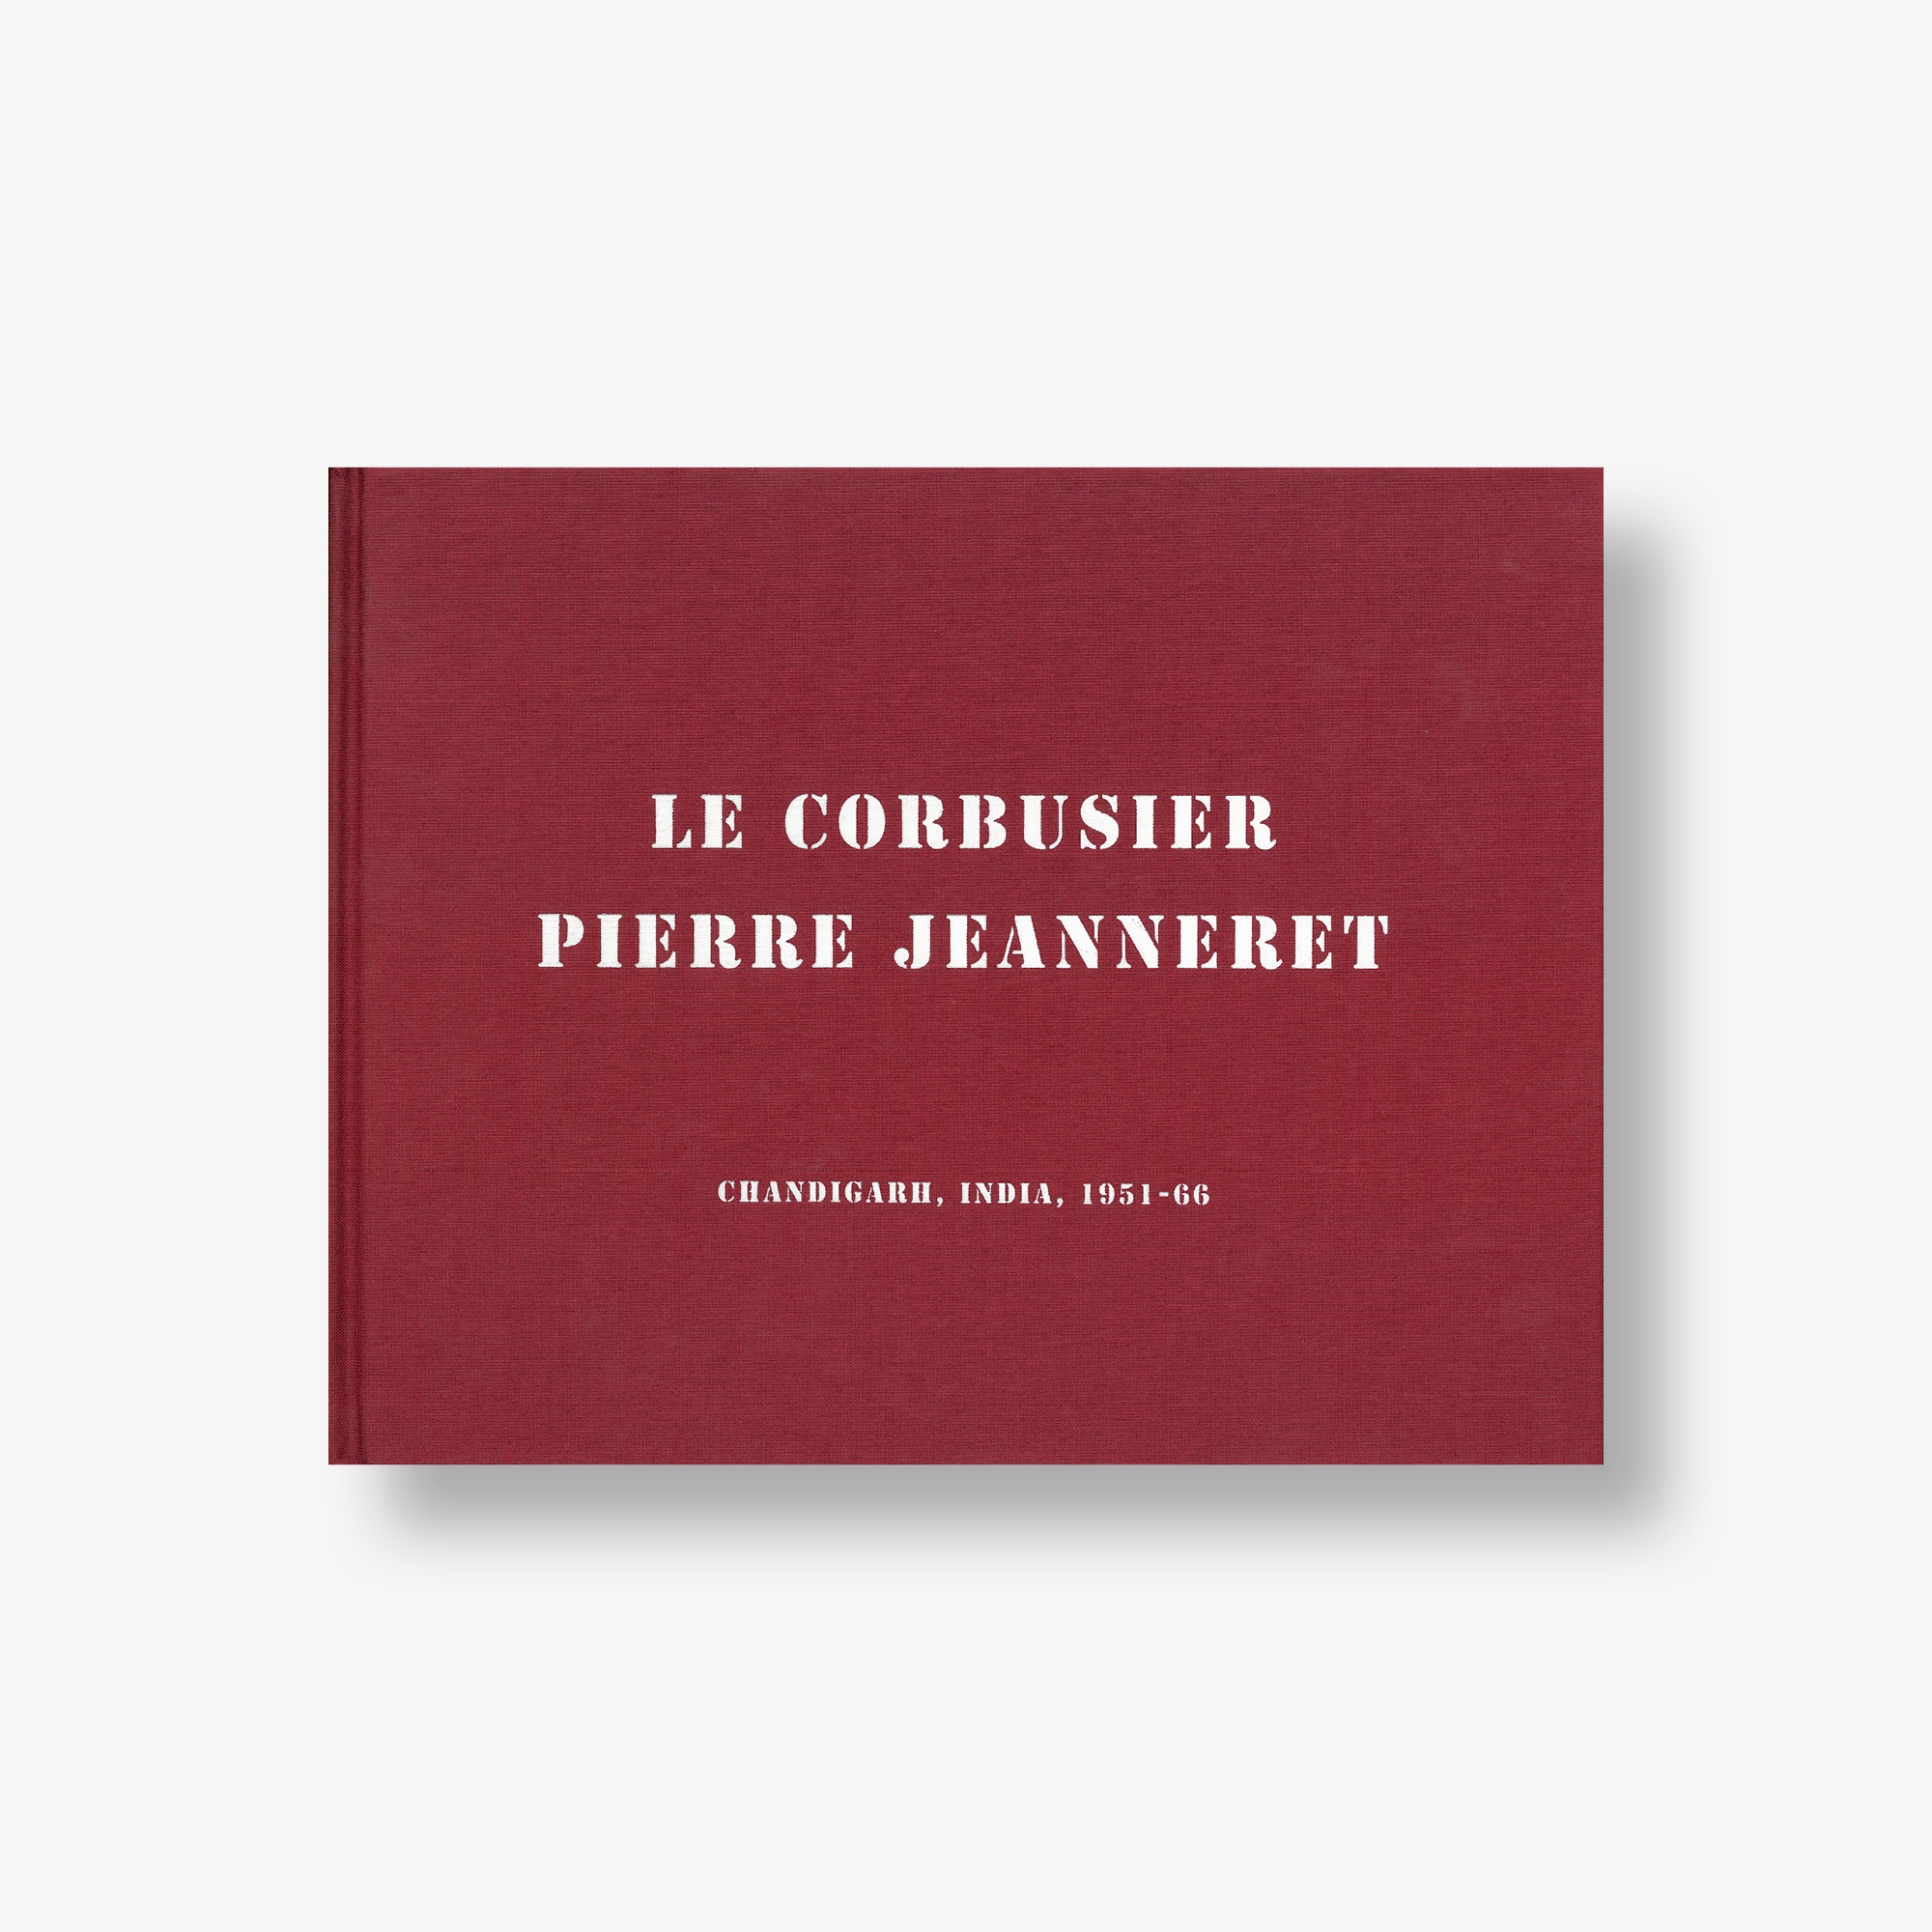 Le Corbusier, Pierre Jeanneret: Chandigarh, India,1951-66